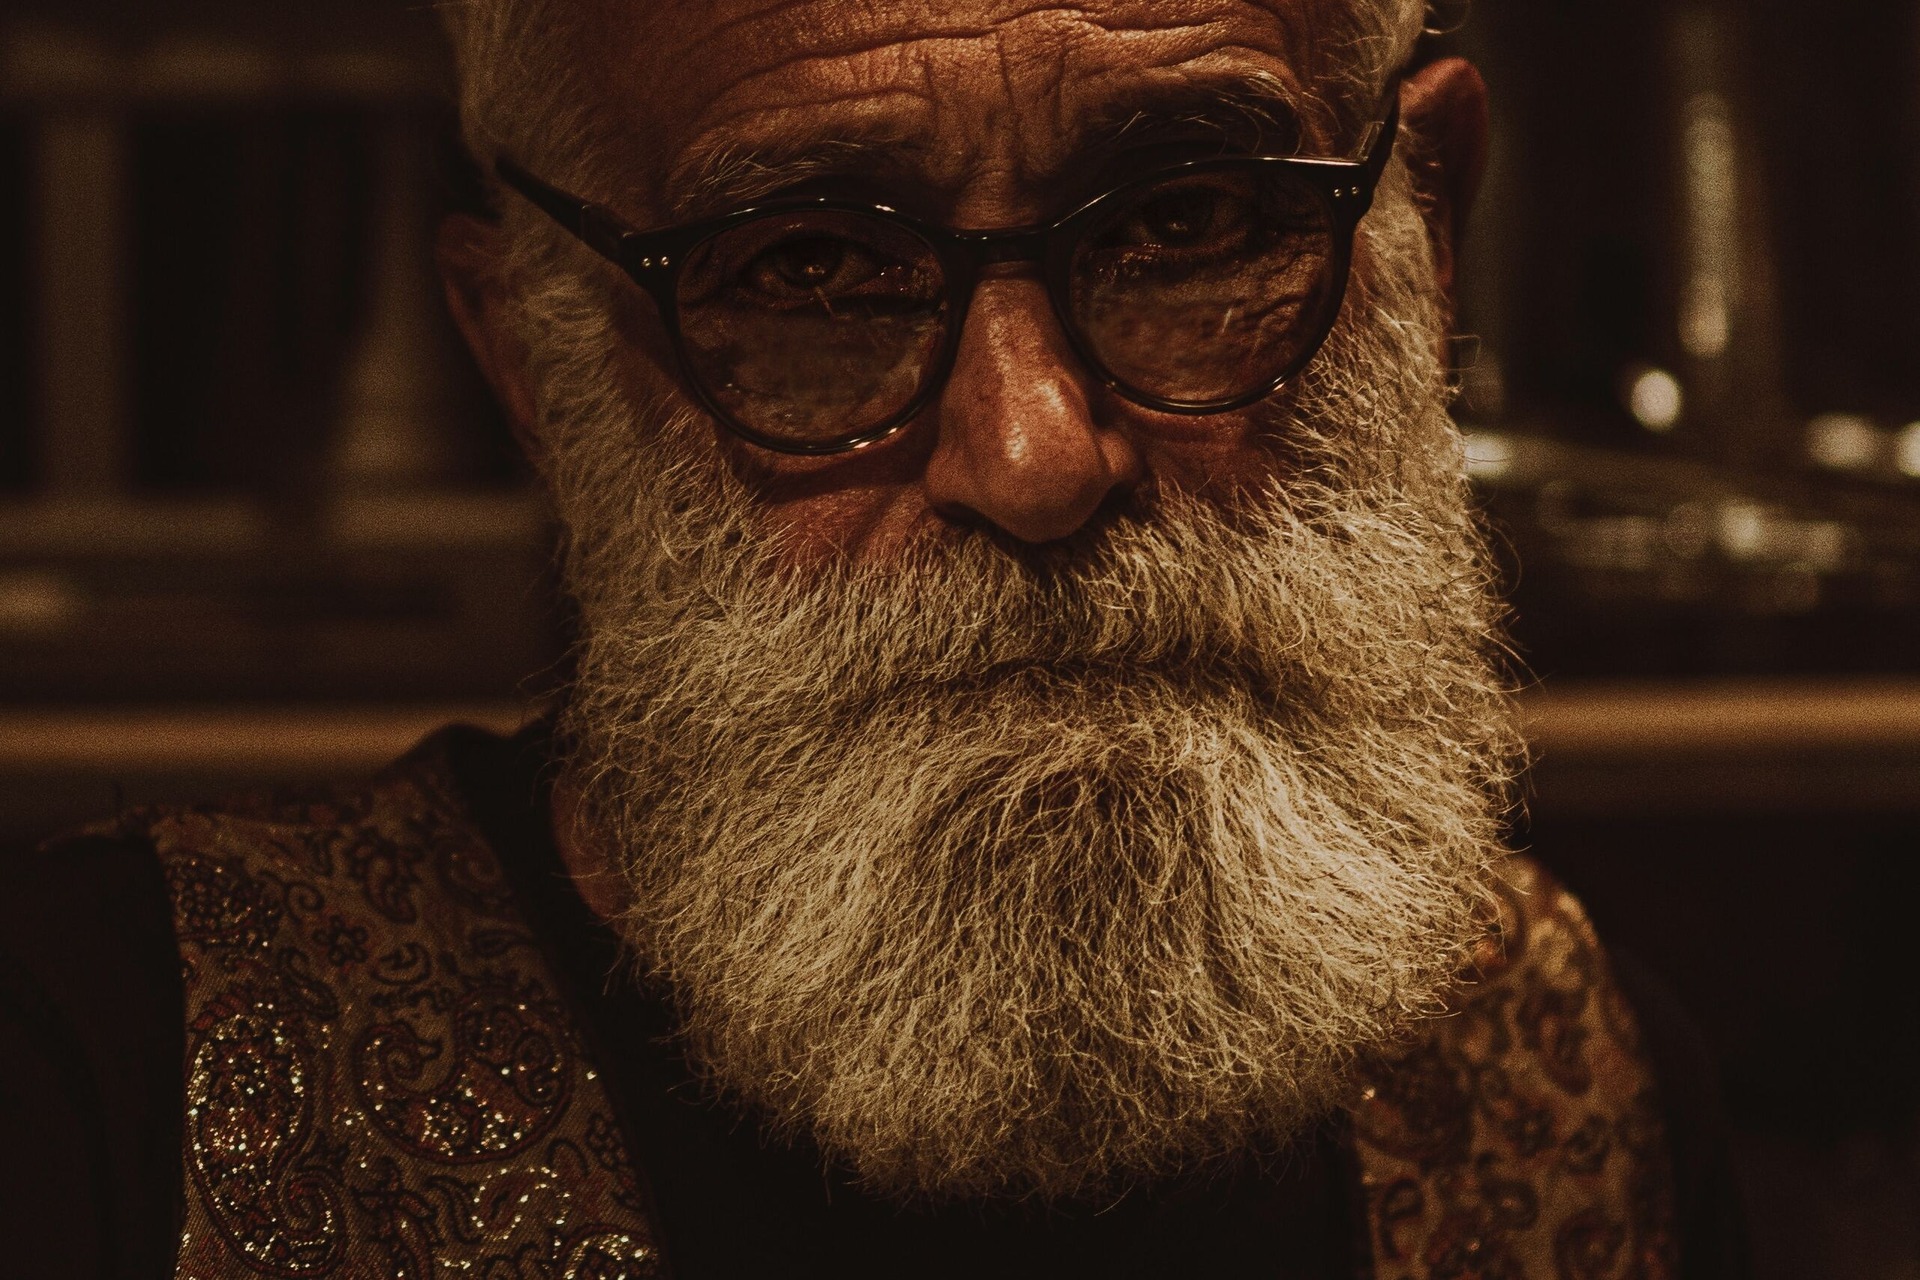 Thick grey beard on an older man